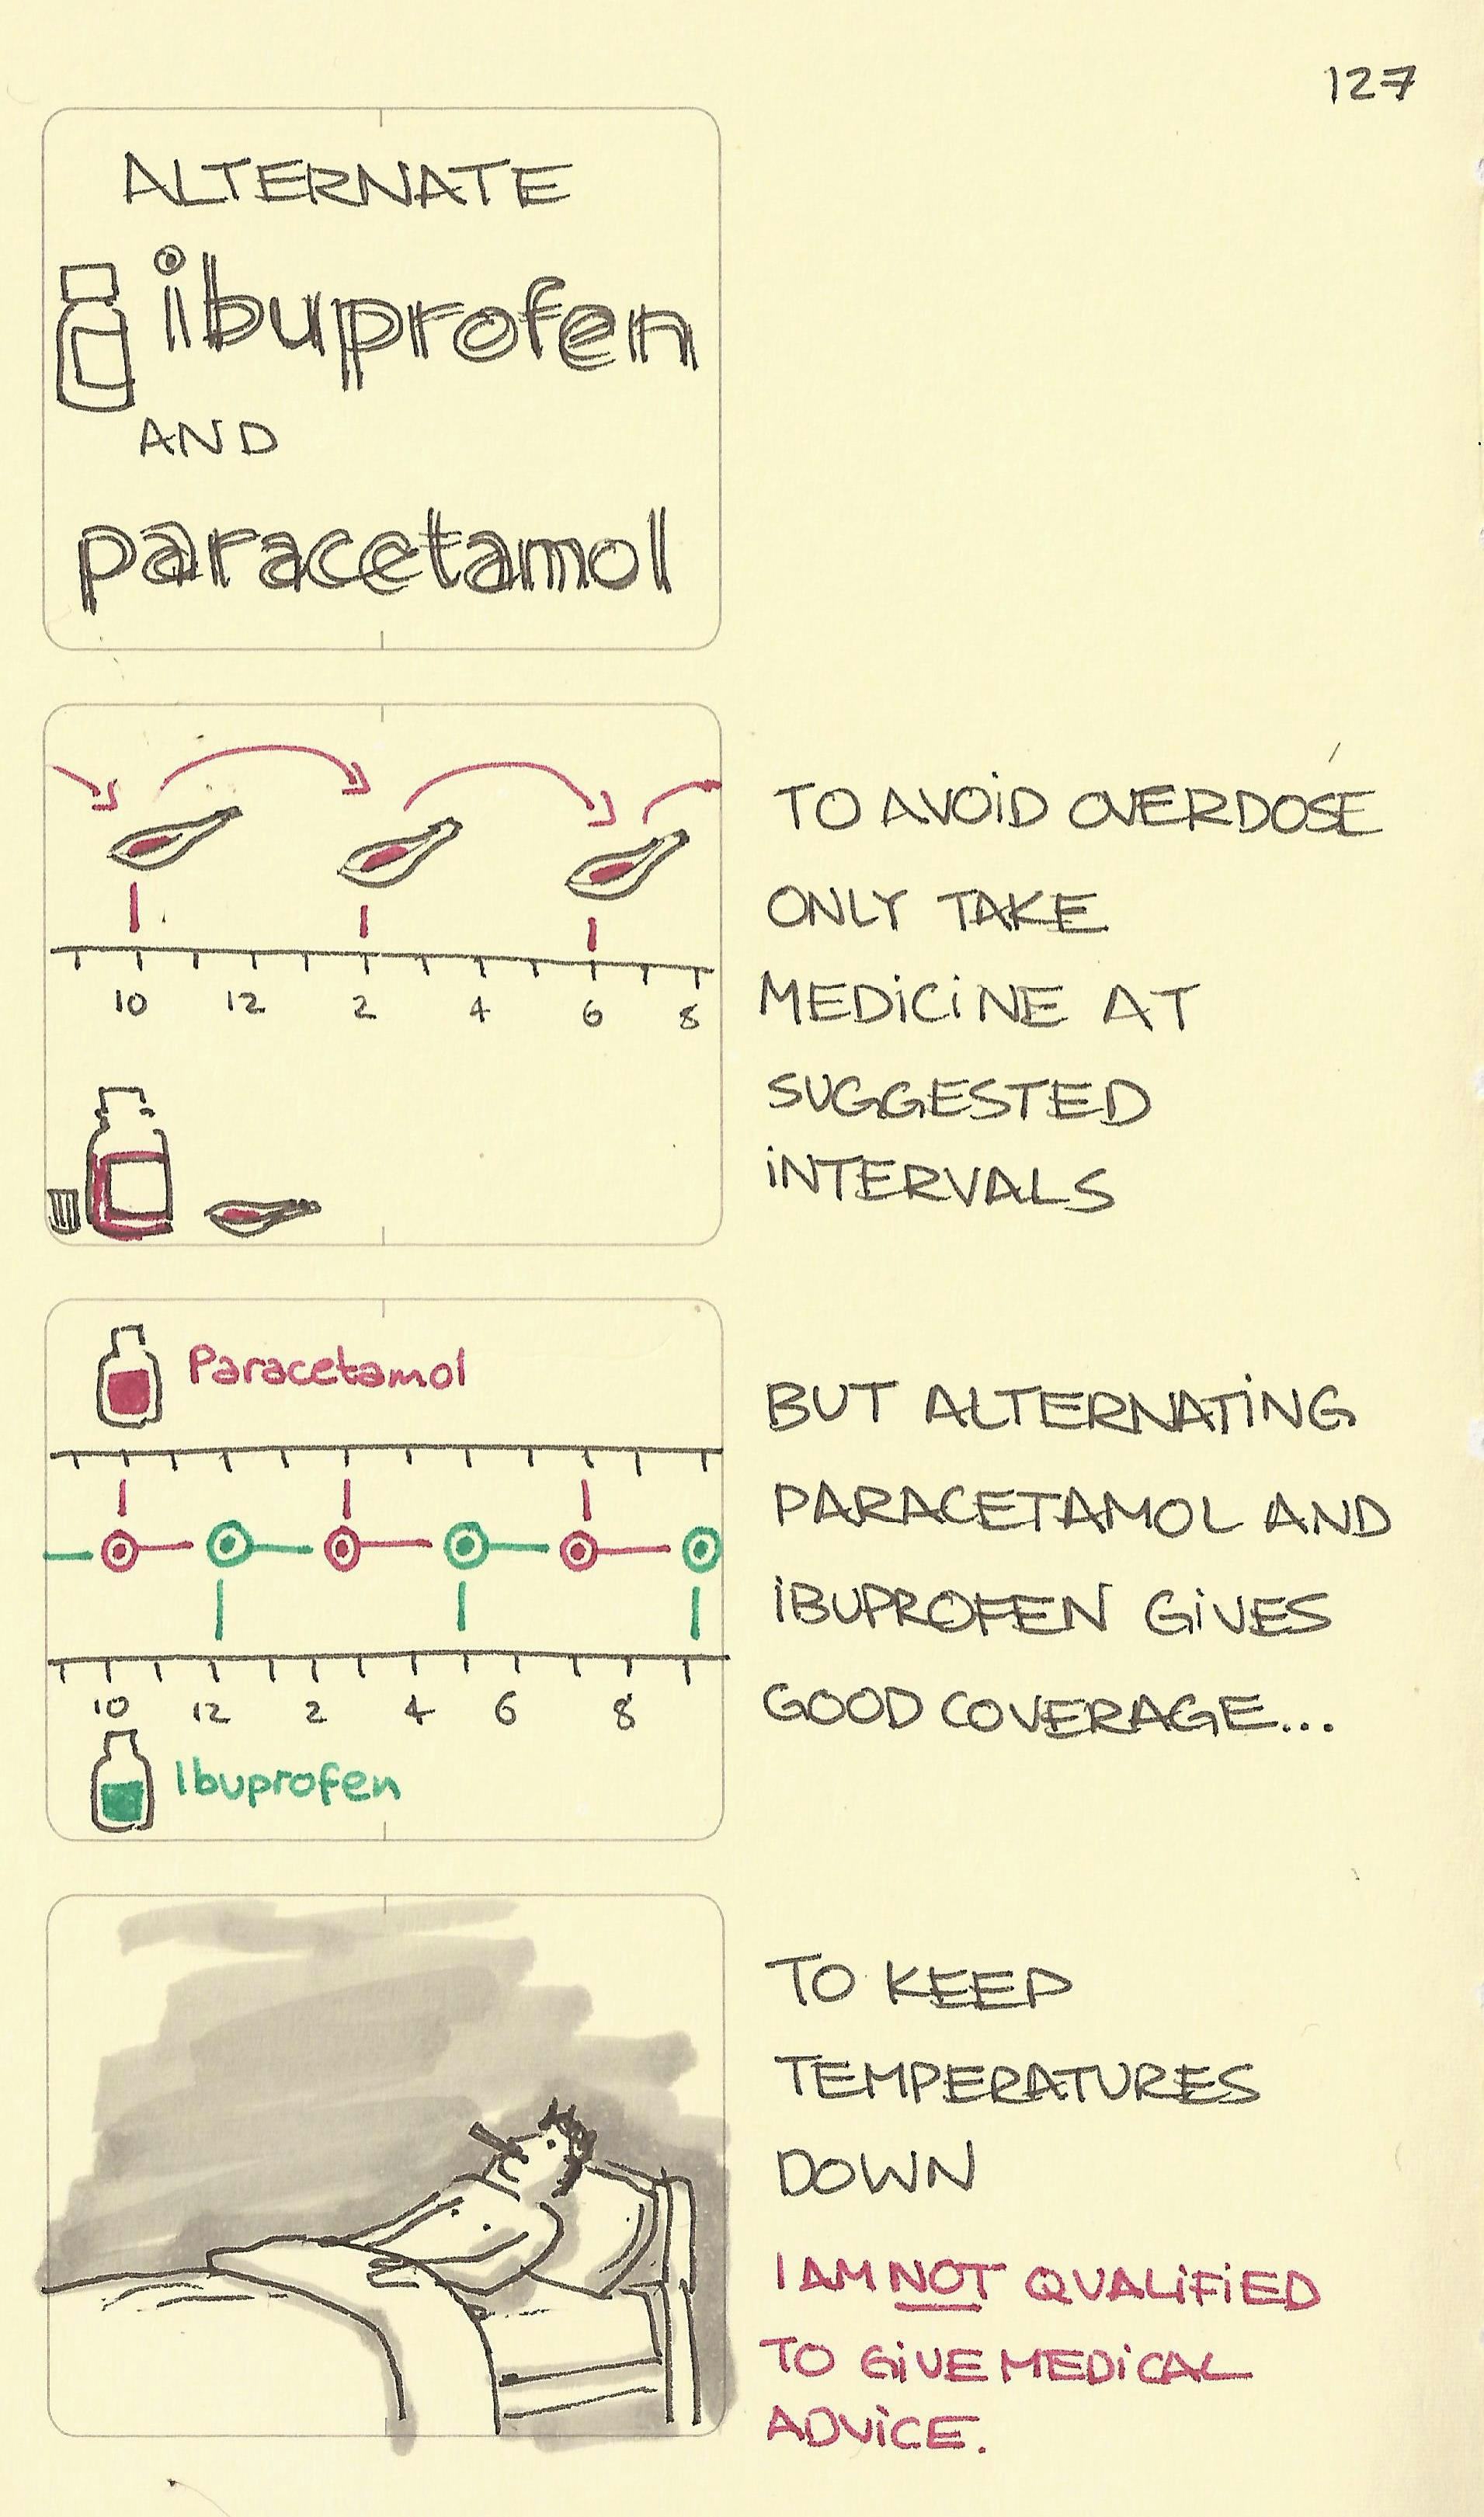 Alternate ibuprofen and paracetamol - Sketchplanations